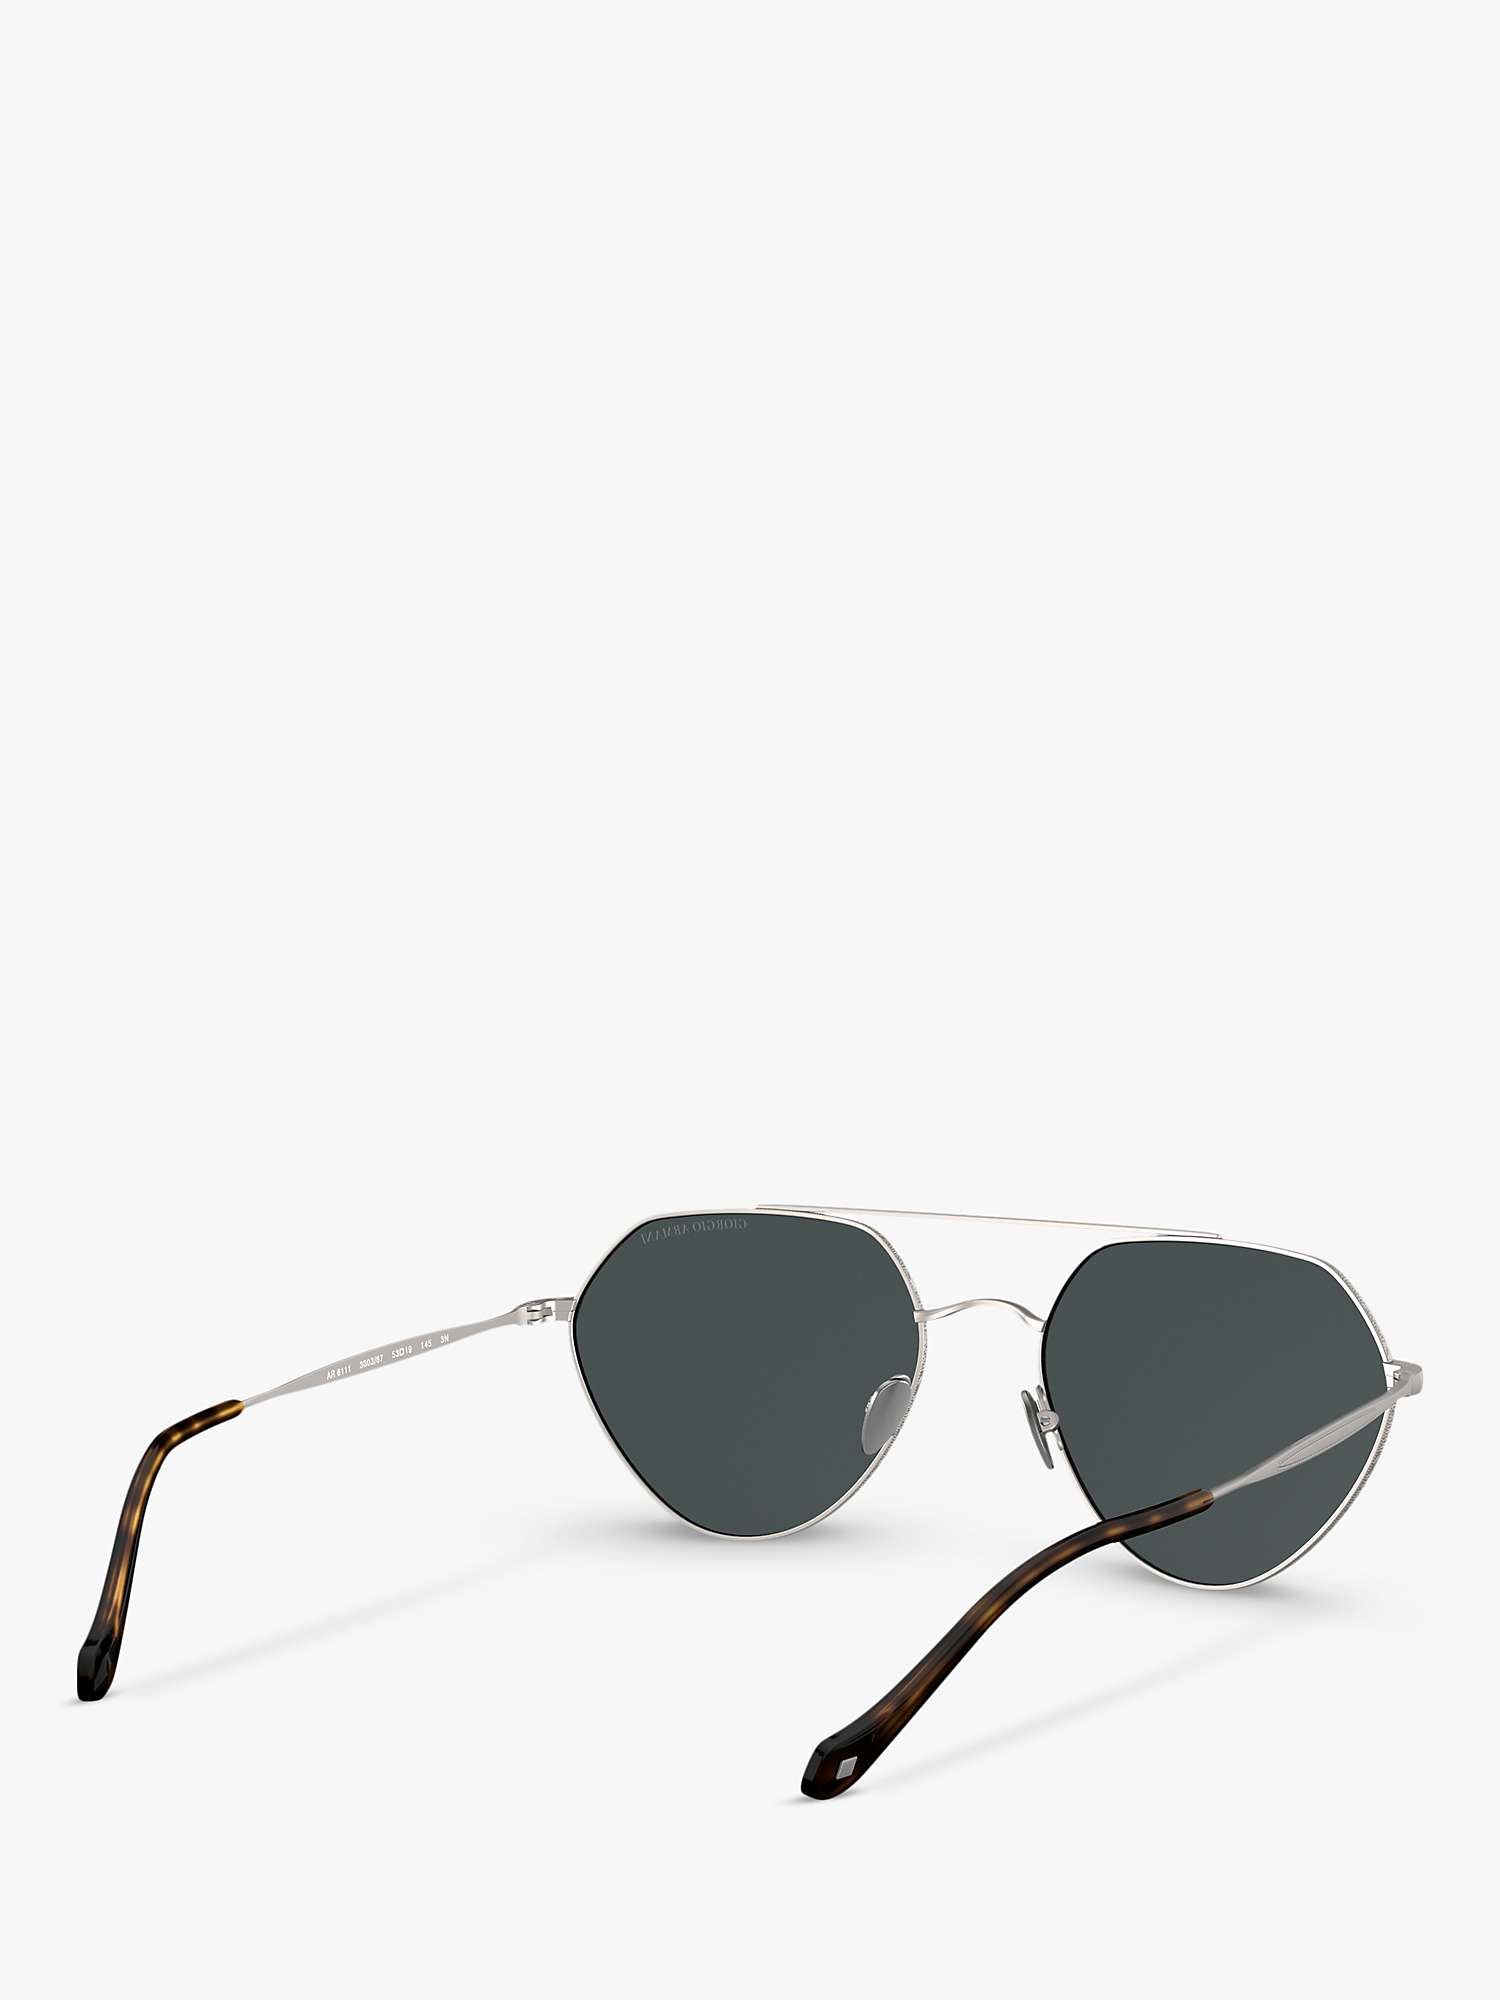 Buy Giorgio Armani AR6111 Women's Irregular Sunglasses, Matte Gunmetal/Grey Online at johnlewis.com